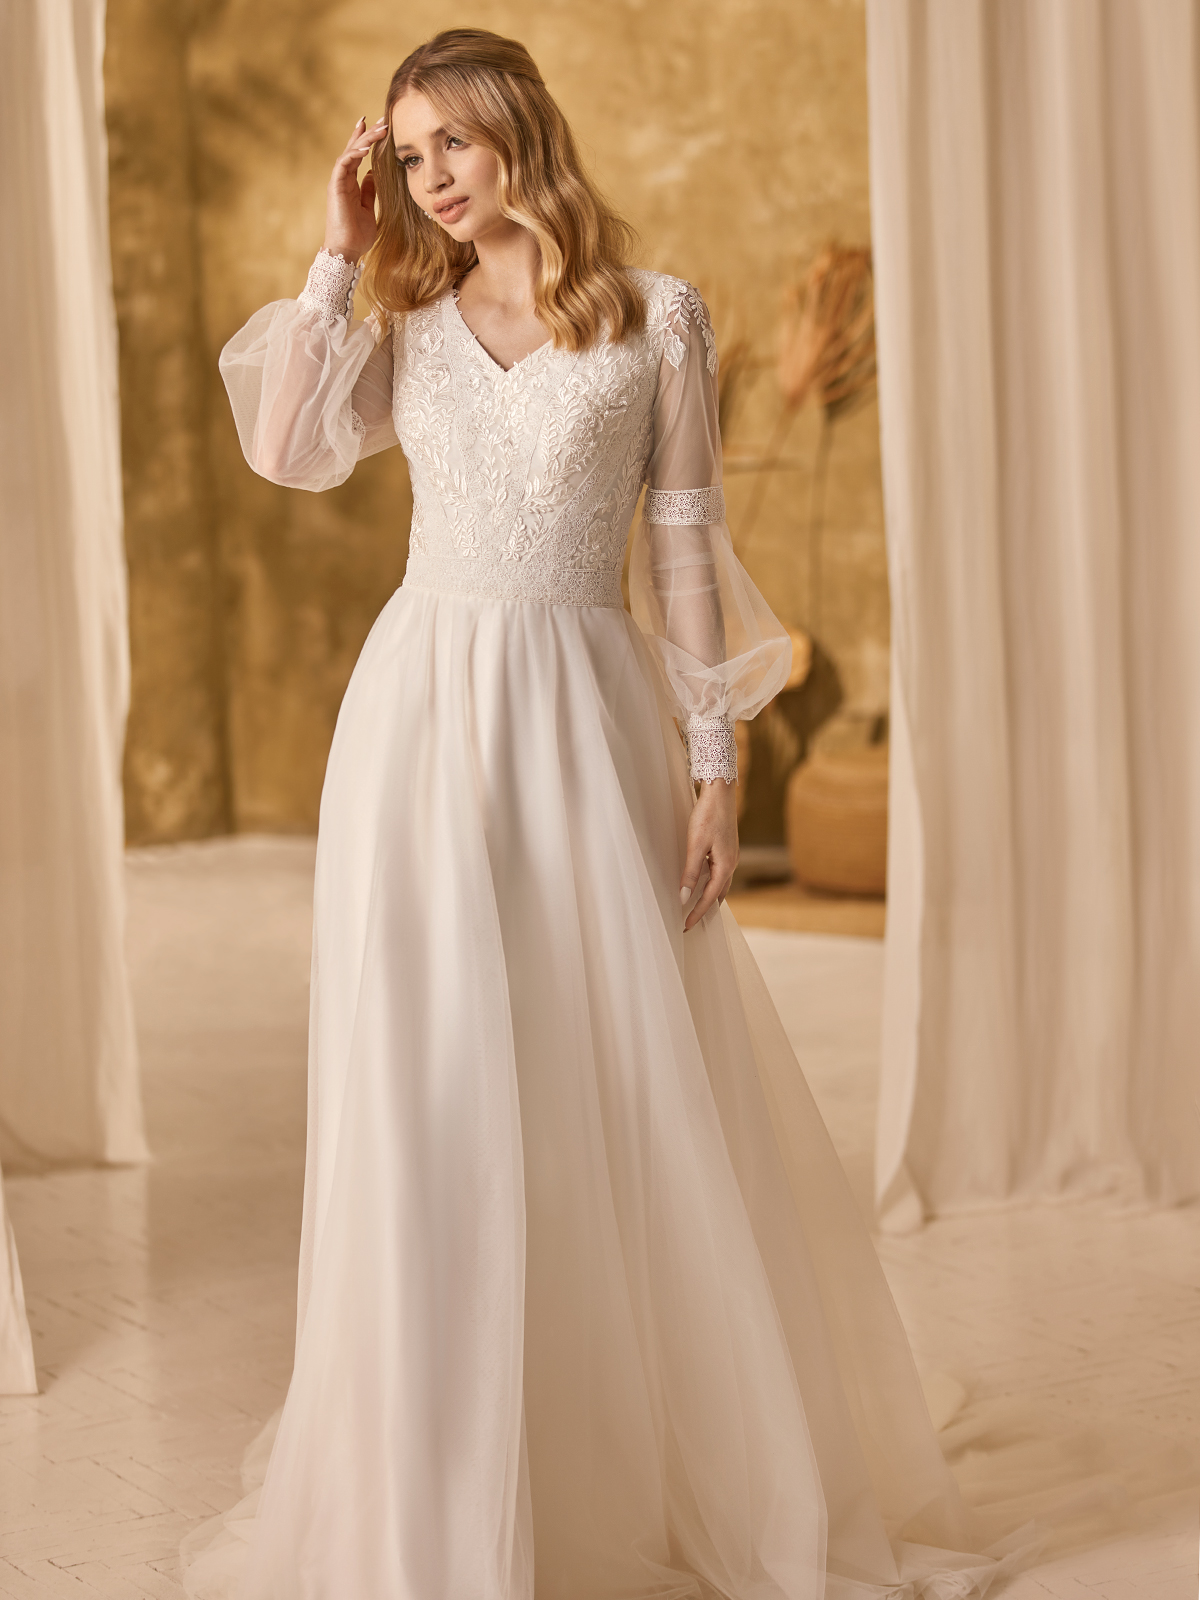 Bride wearing a minimalist wedding gown with flowy poet sleeves